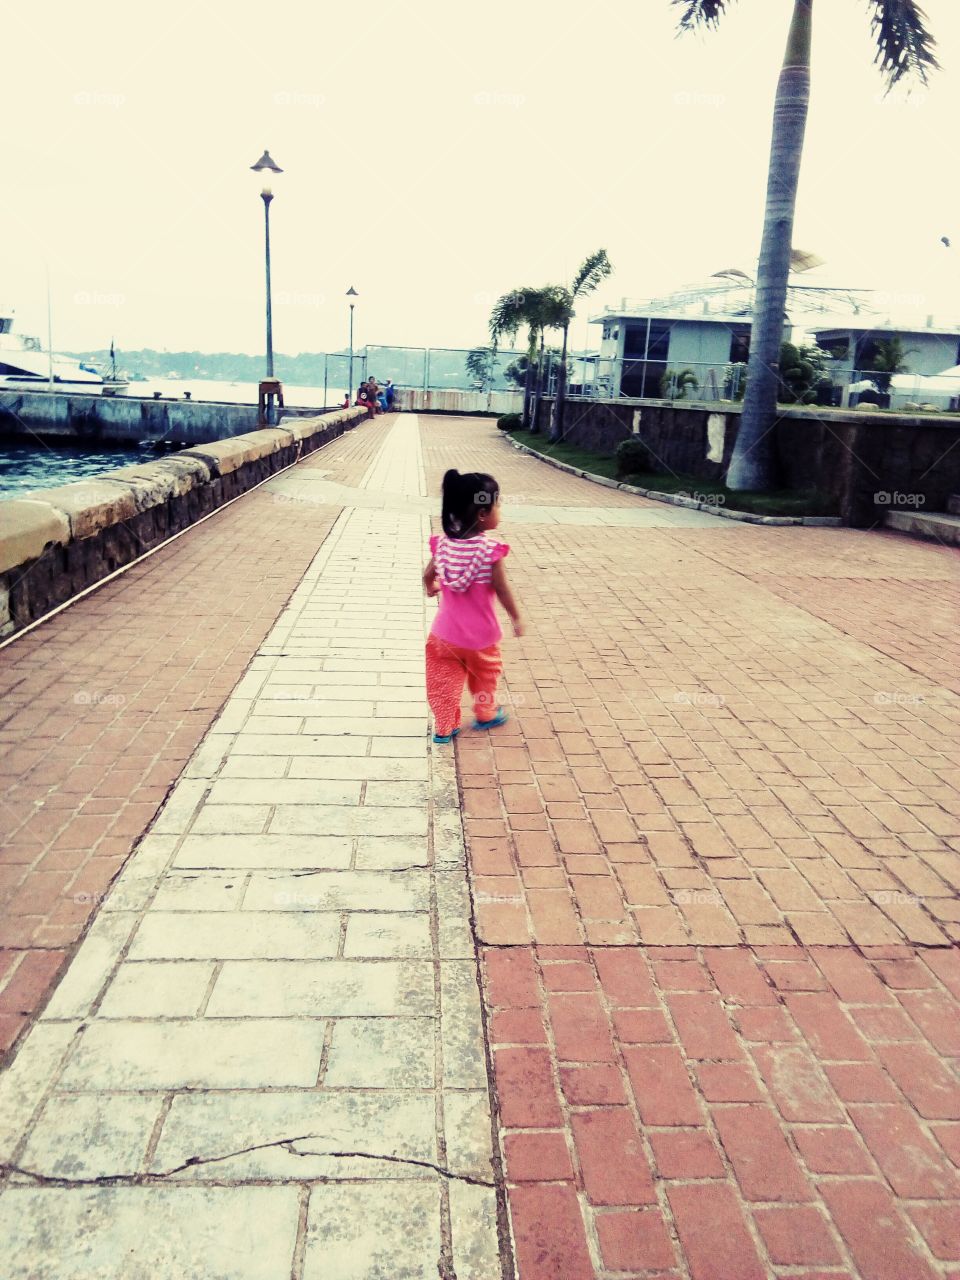 A little kiddo taking a walk at the boardwalk